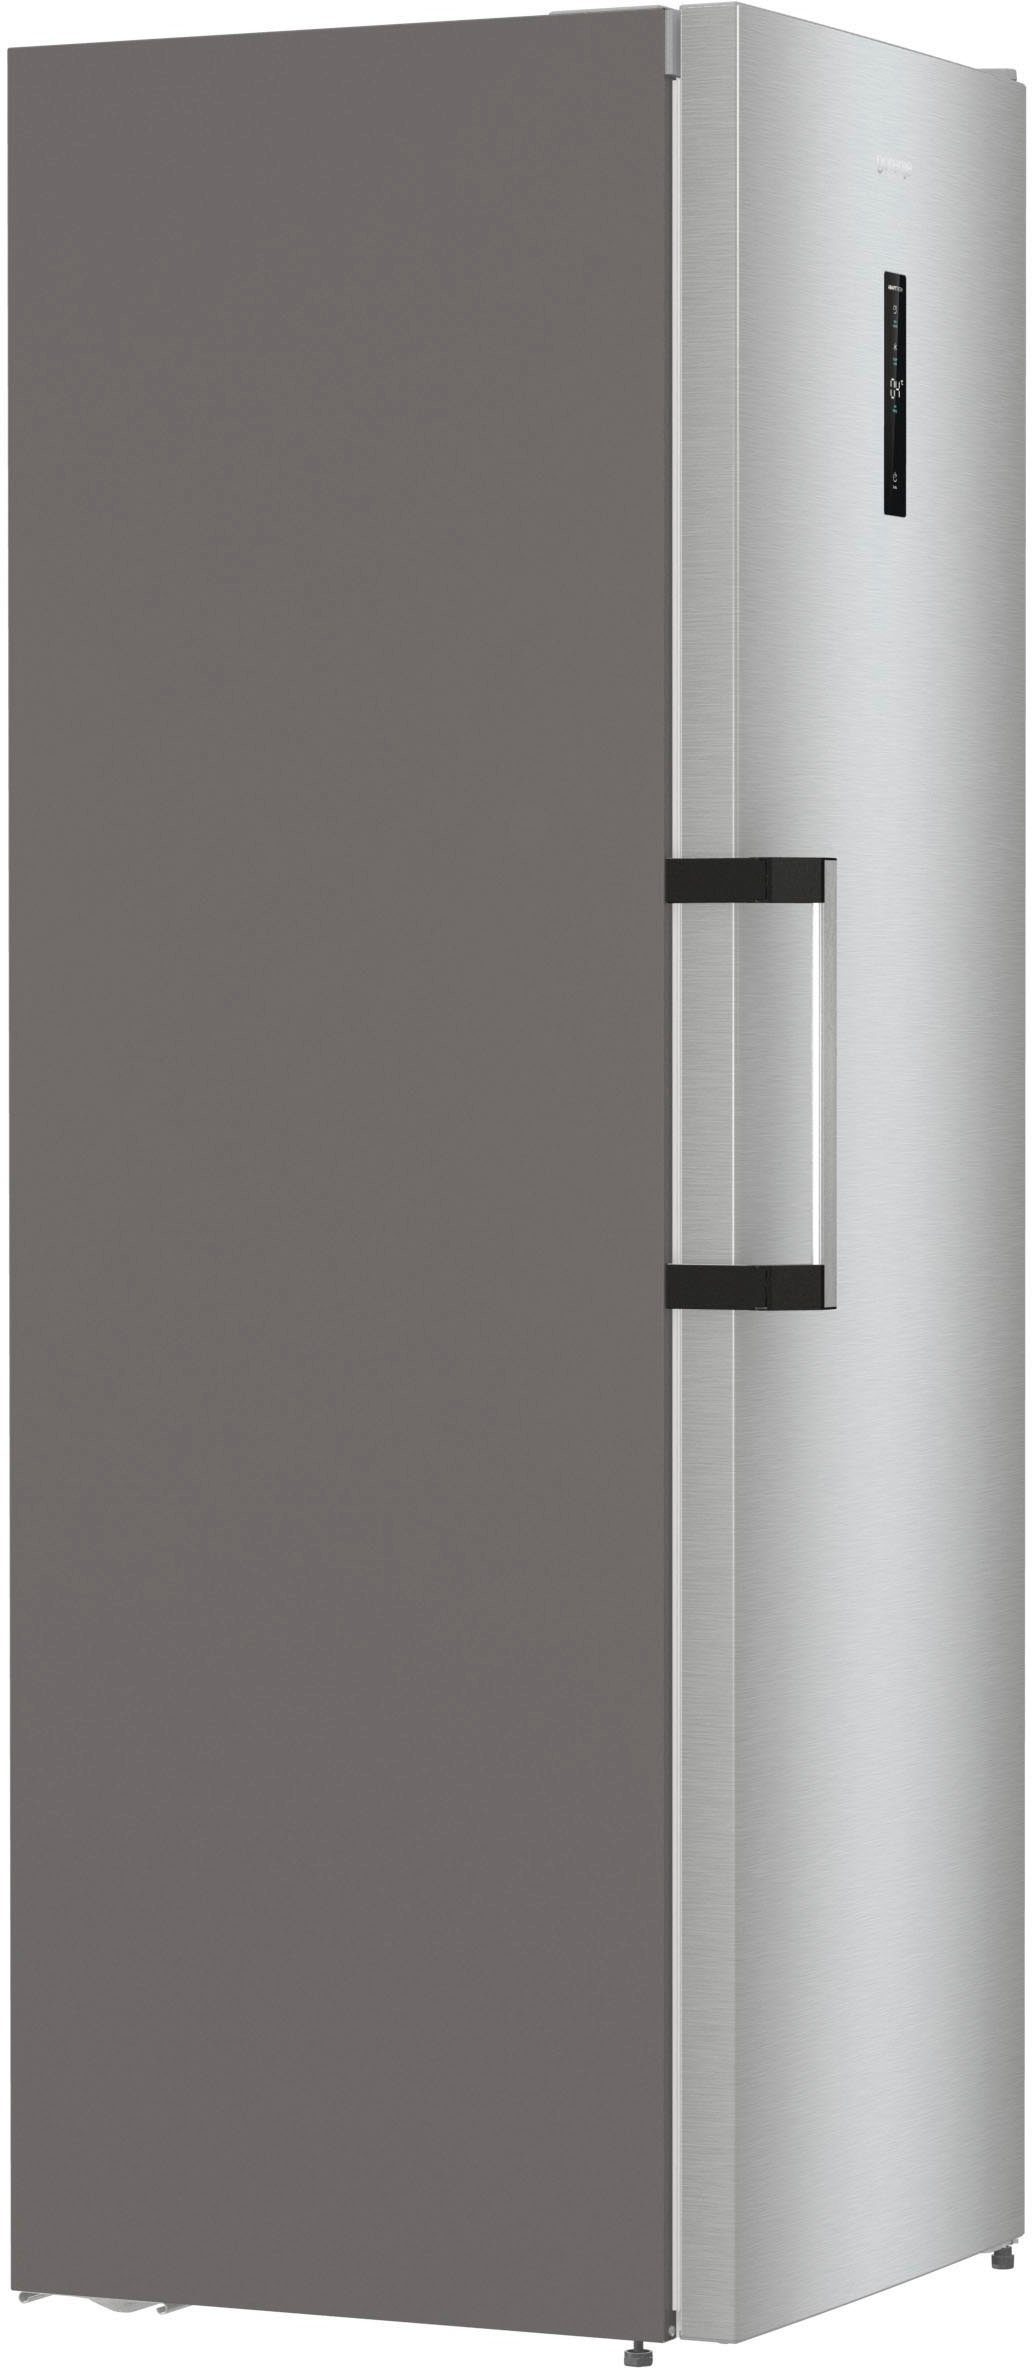 metallic Kühlschrank grau cm cm 59,5 breit 185 hoch, R619DAXL6, GORENJE